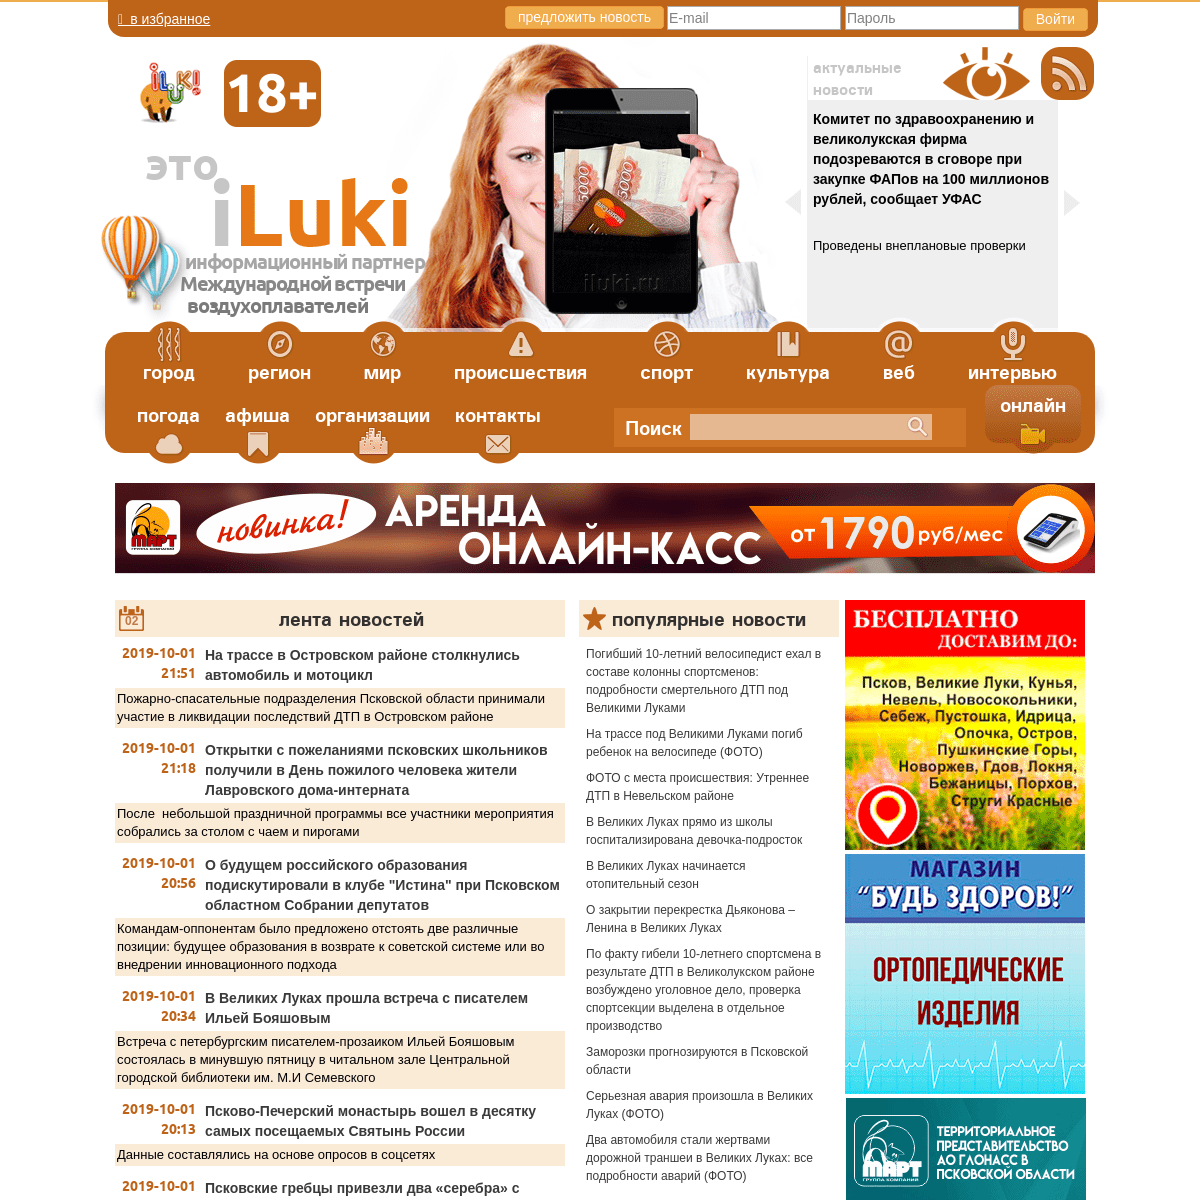 A complete backup of iluki.ru